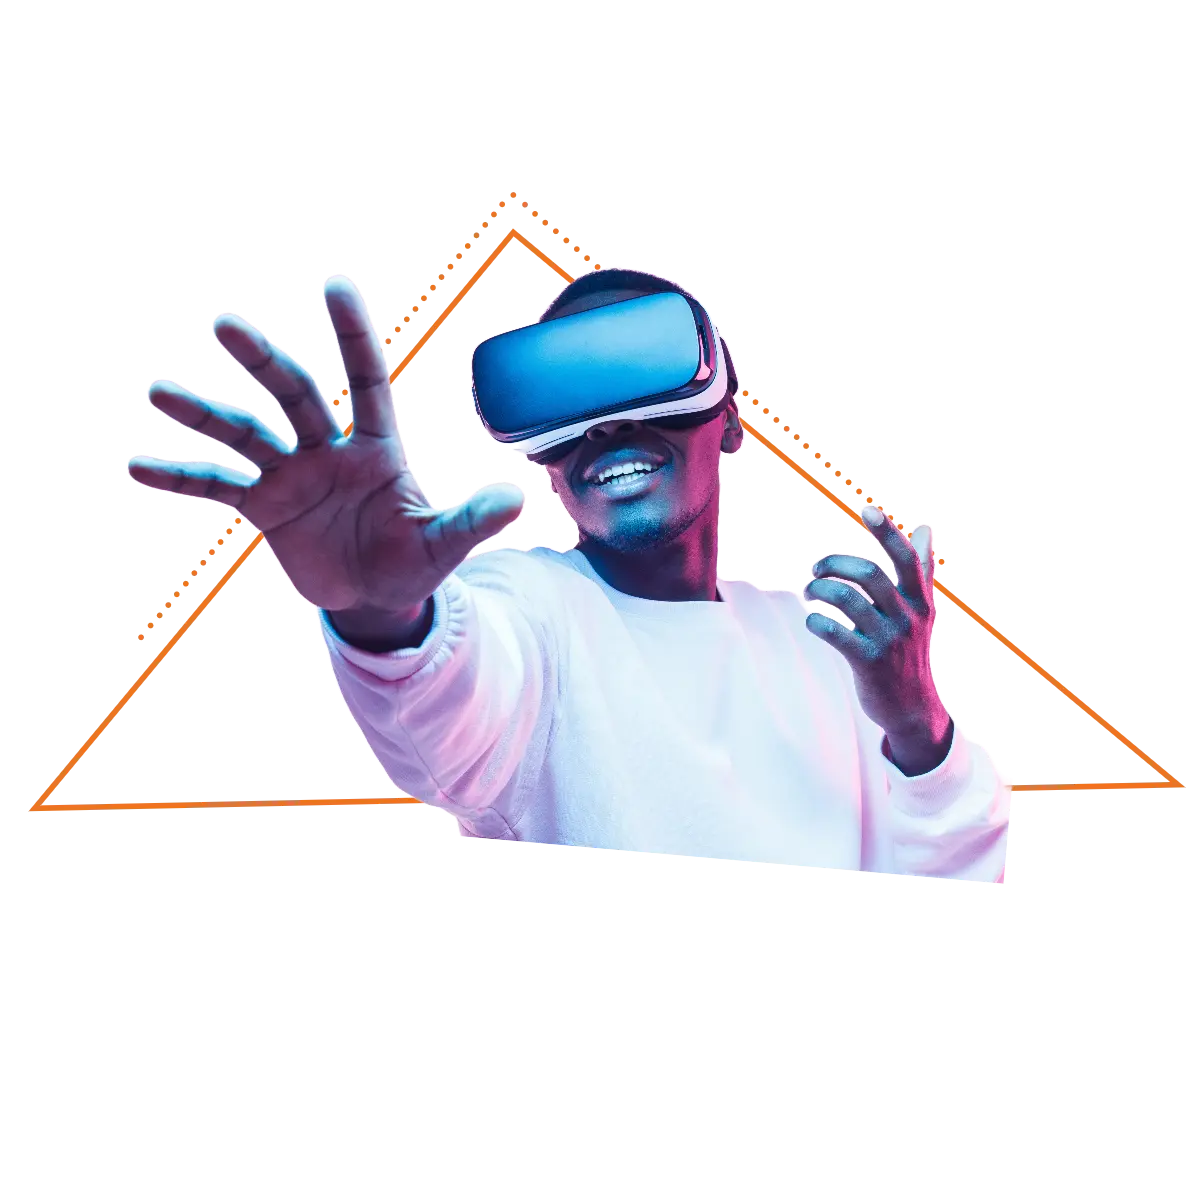 Man wearing VR set reaching through triangle 3D concept